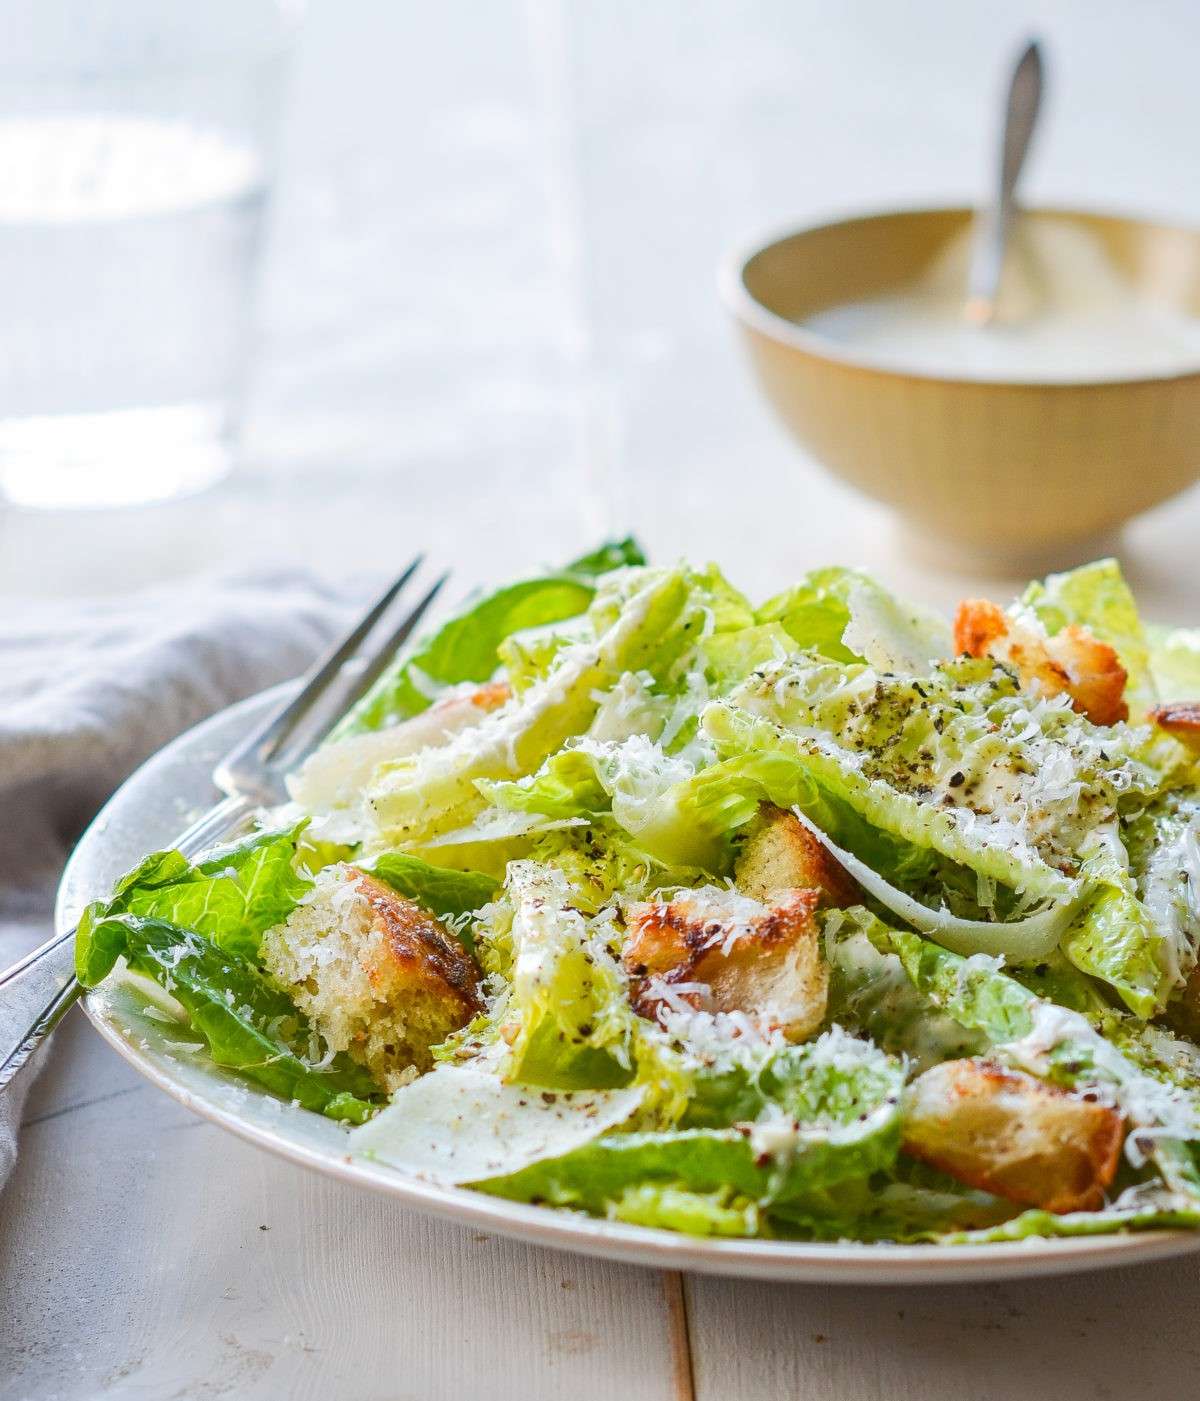 Homemade Caesar Salad Dressing from Mayonnaise